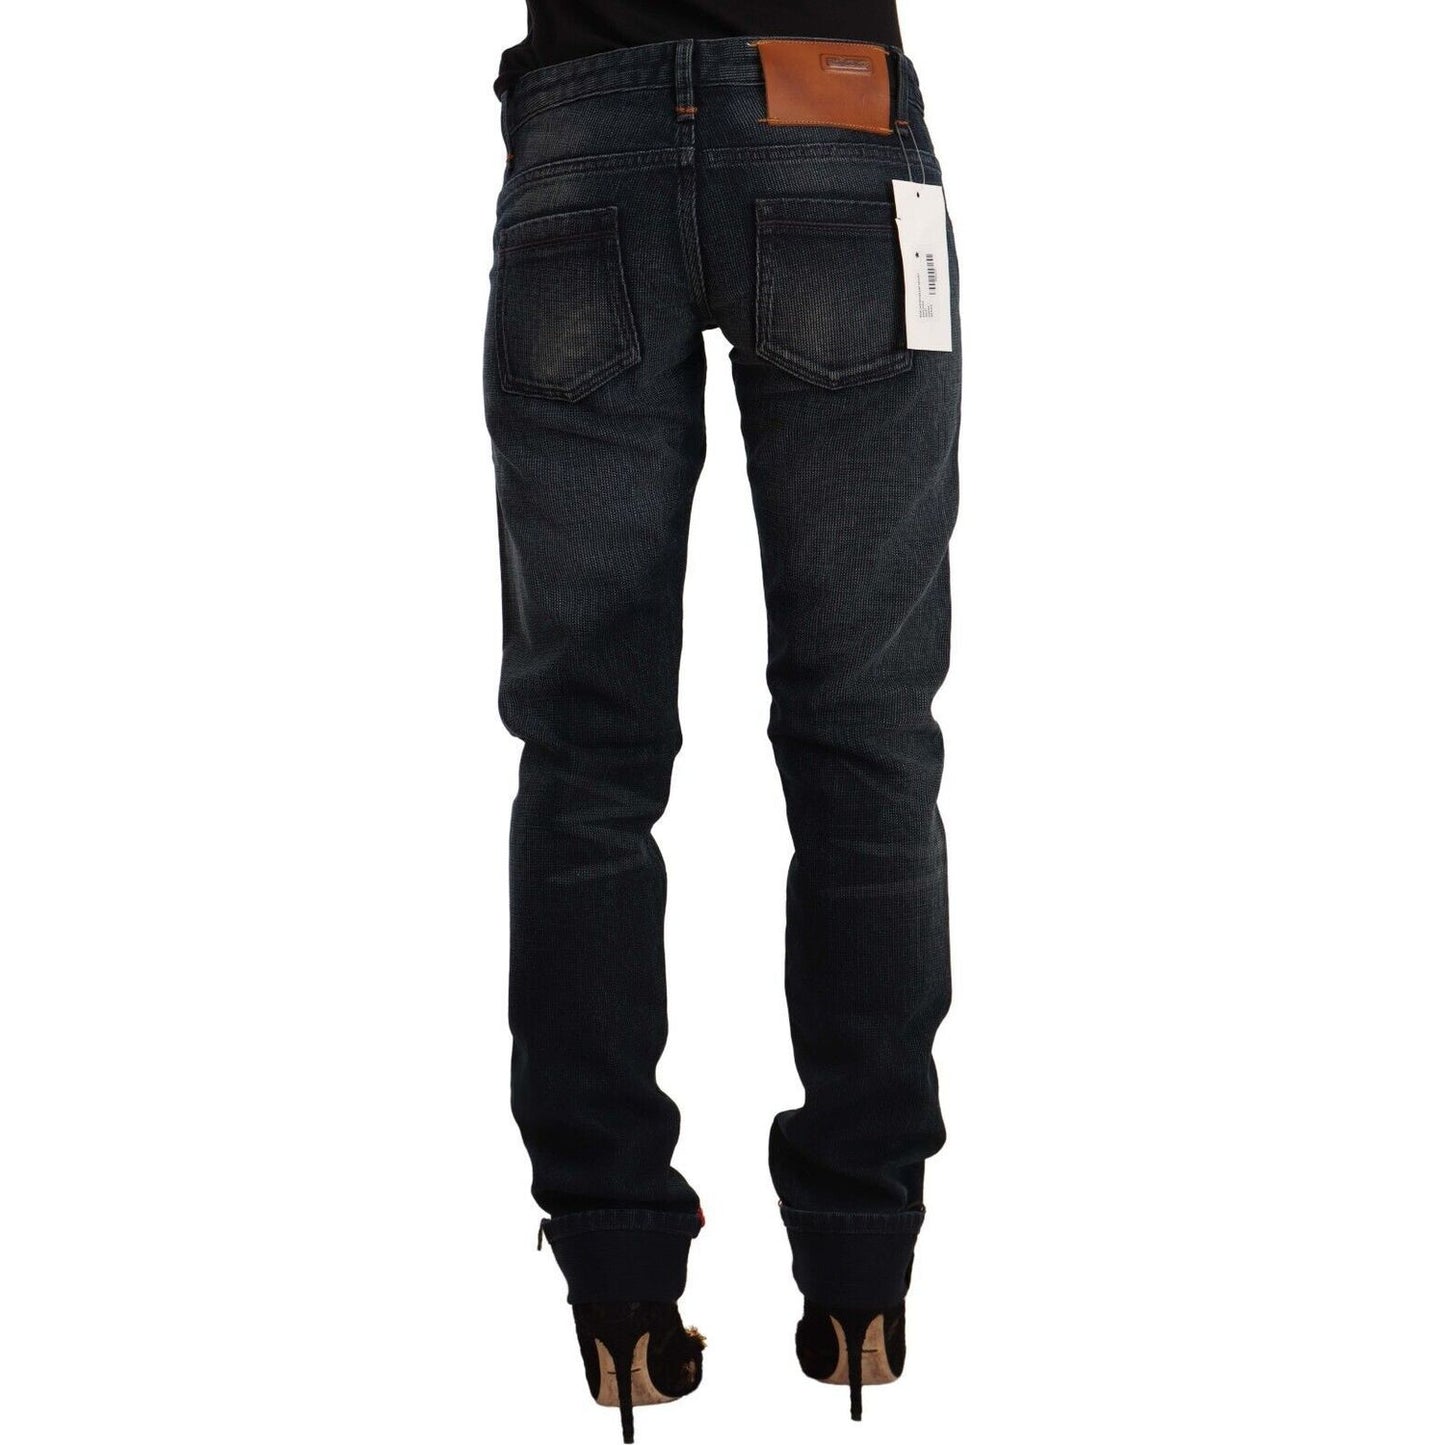 Acht Sleek Black Washed Skinny Jeans black-washed-cotton-skinny-denim-low-waist-jeans